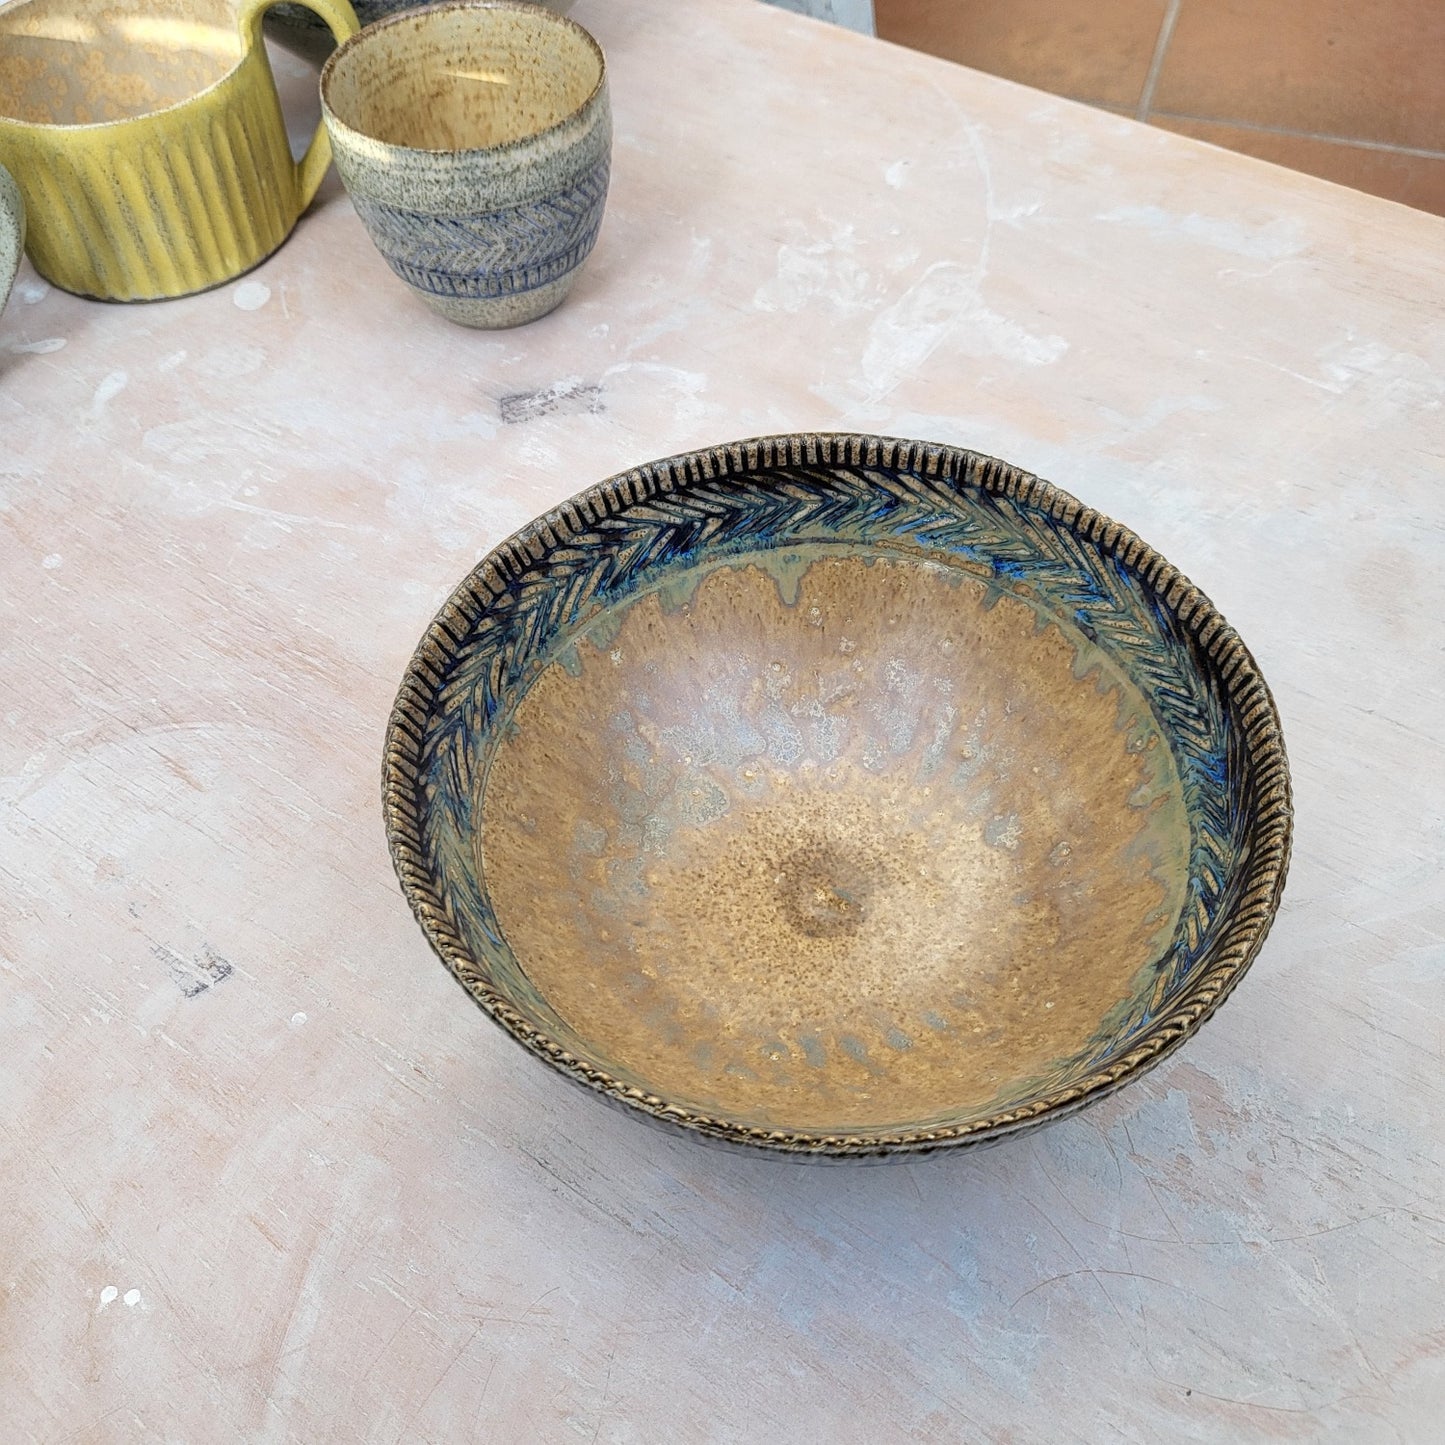 Handmade ceramic bowl with blue carvings.